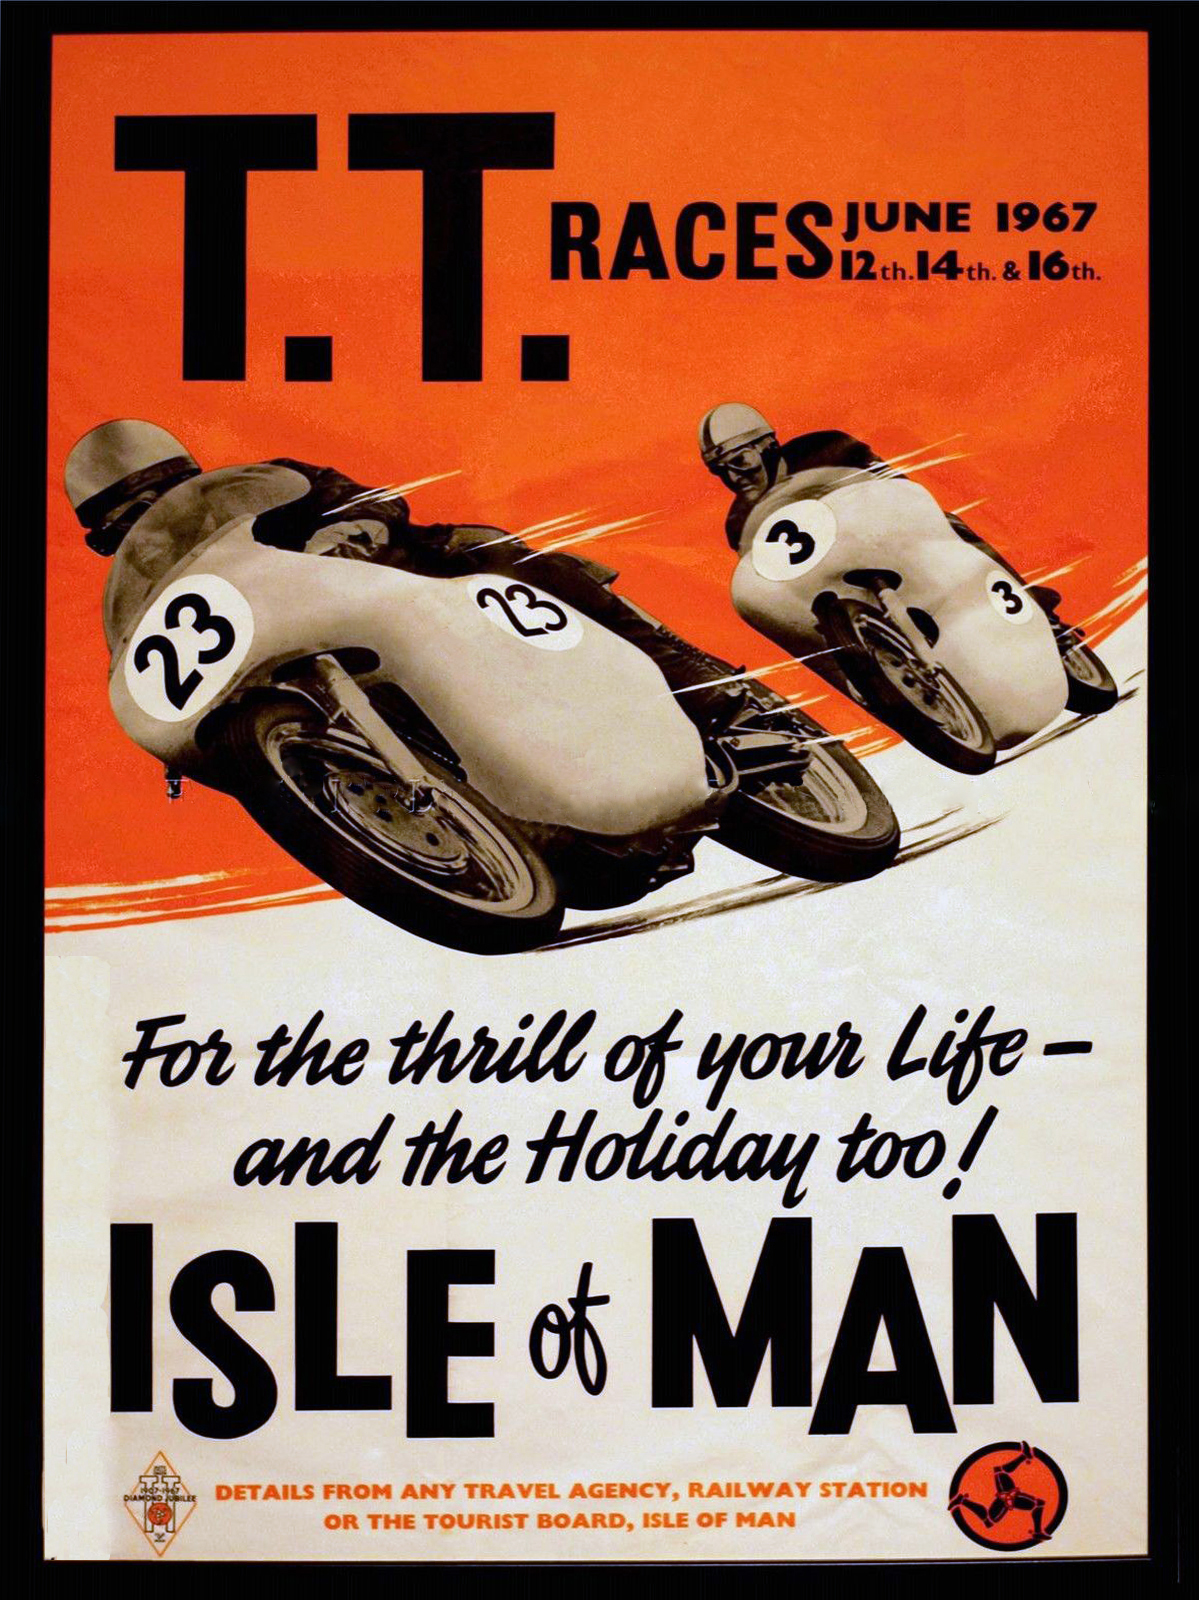 transpress nz: Isle of Man TT motorbike race poster, 1967